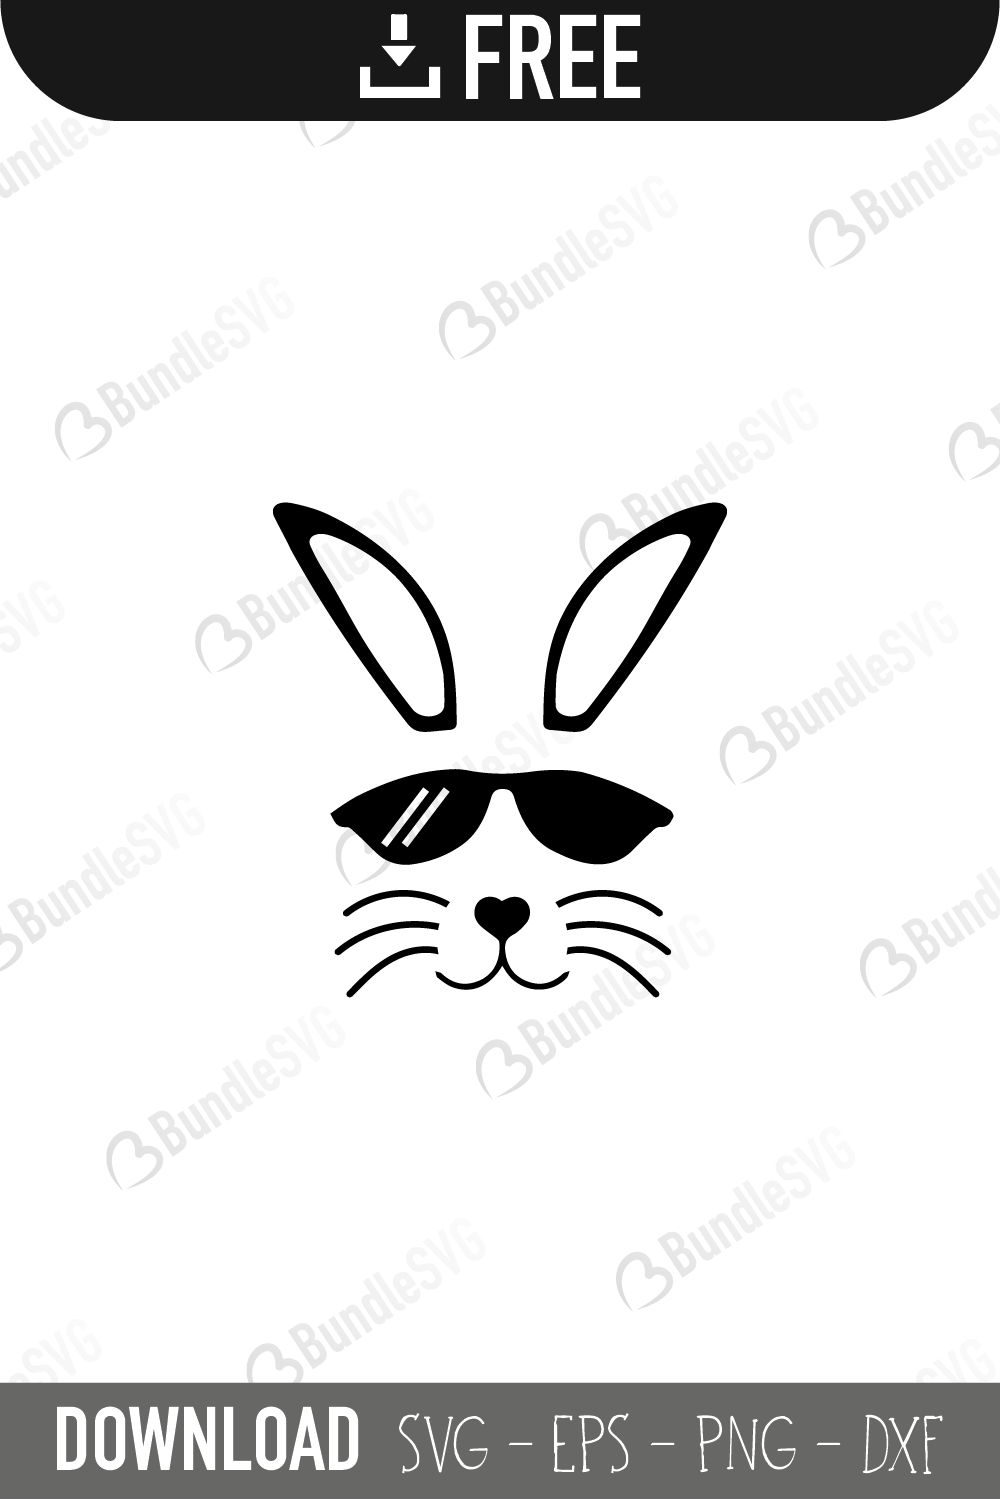 Bunny With Sunglasses SVG Cut Files Free Download | BundleSVG.com